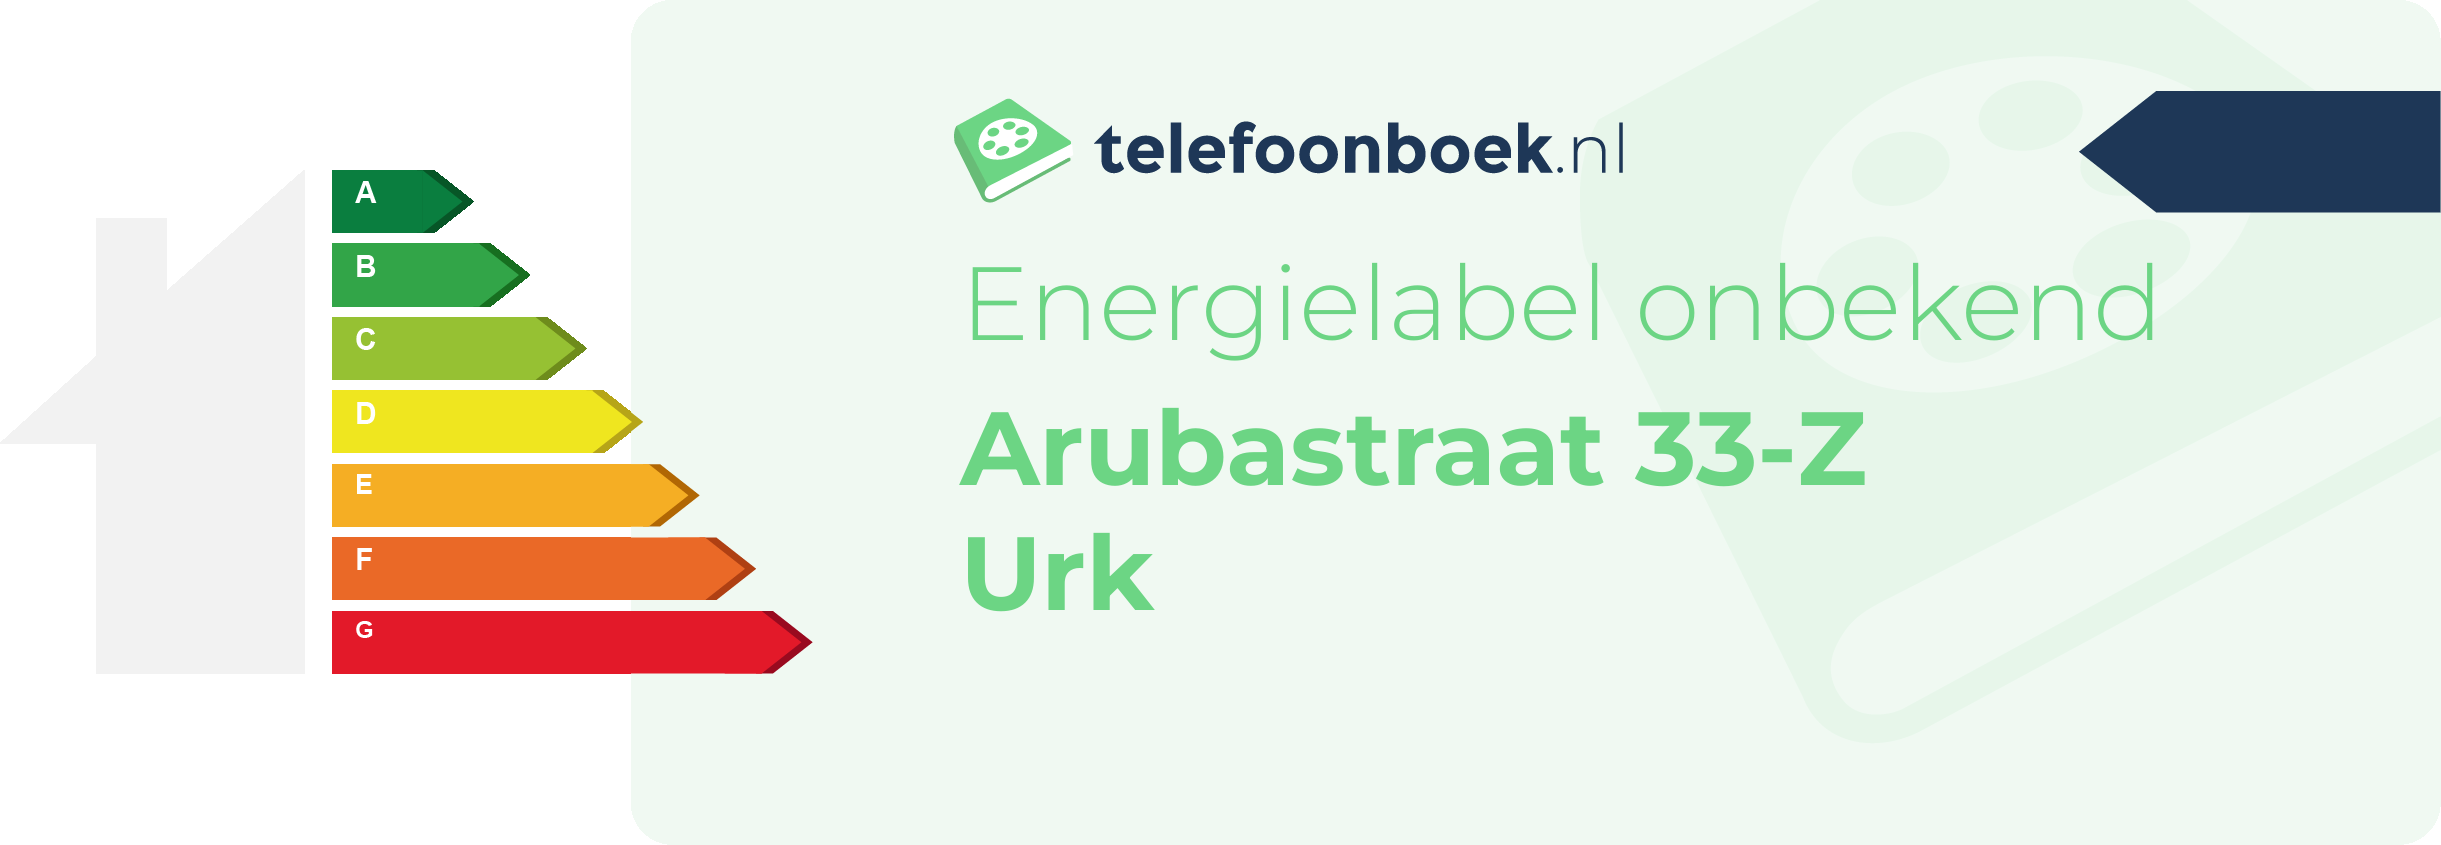 Energielabel Arubastraat 33-Z Urk